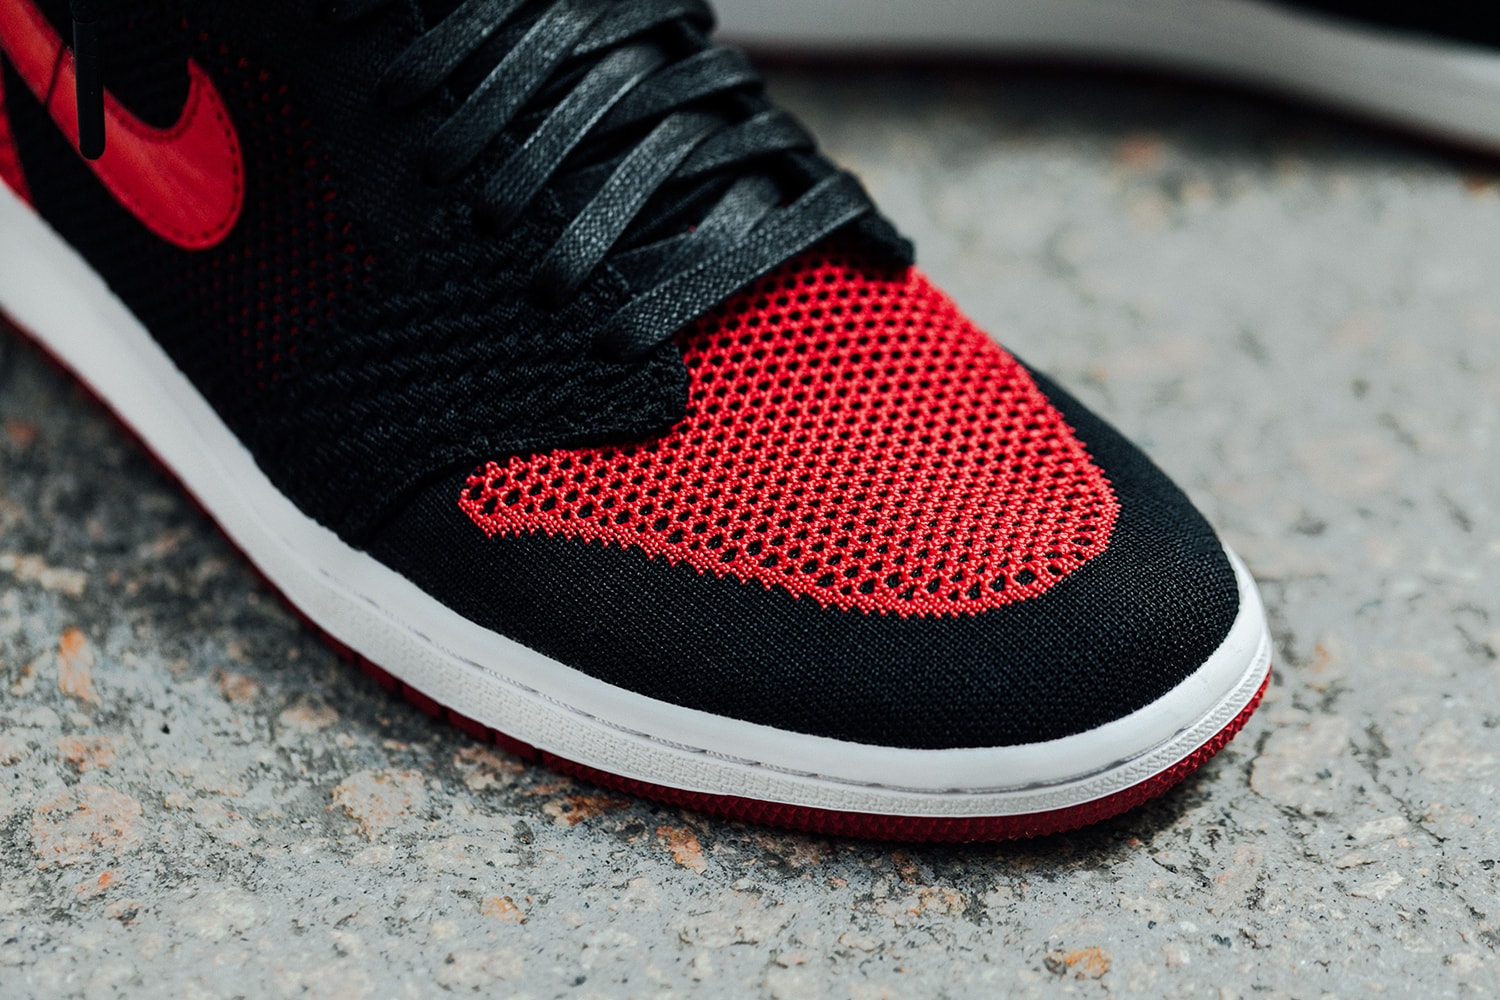 Air Jordan 1 Flyknit Bred Black White Varsity Red Detailed Look Michael Jordan sneakers Jordan Brand Closer Look